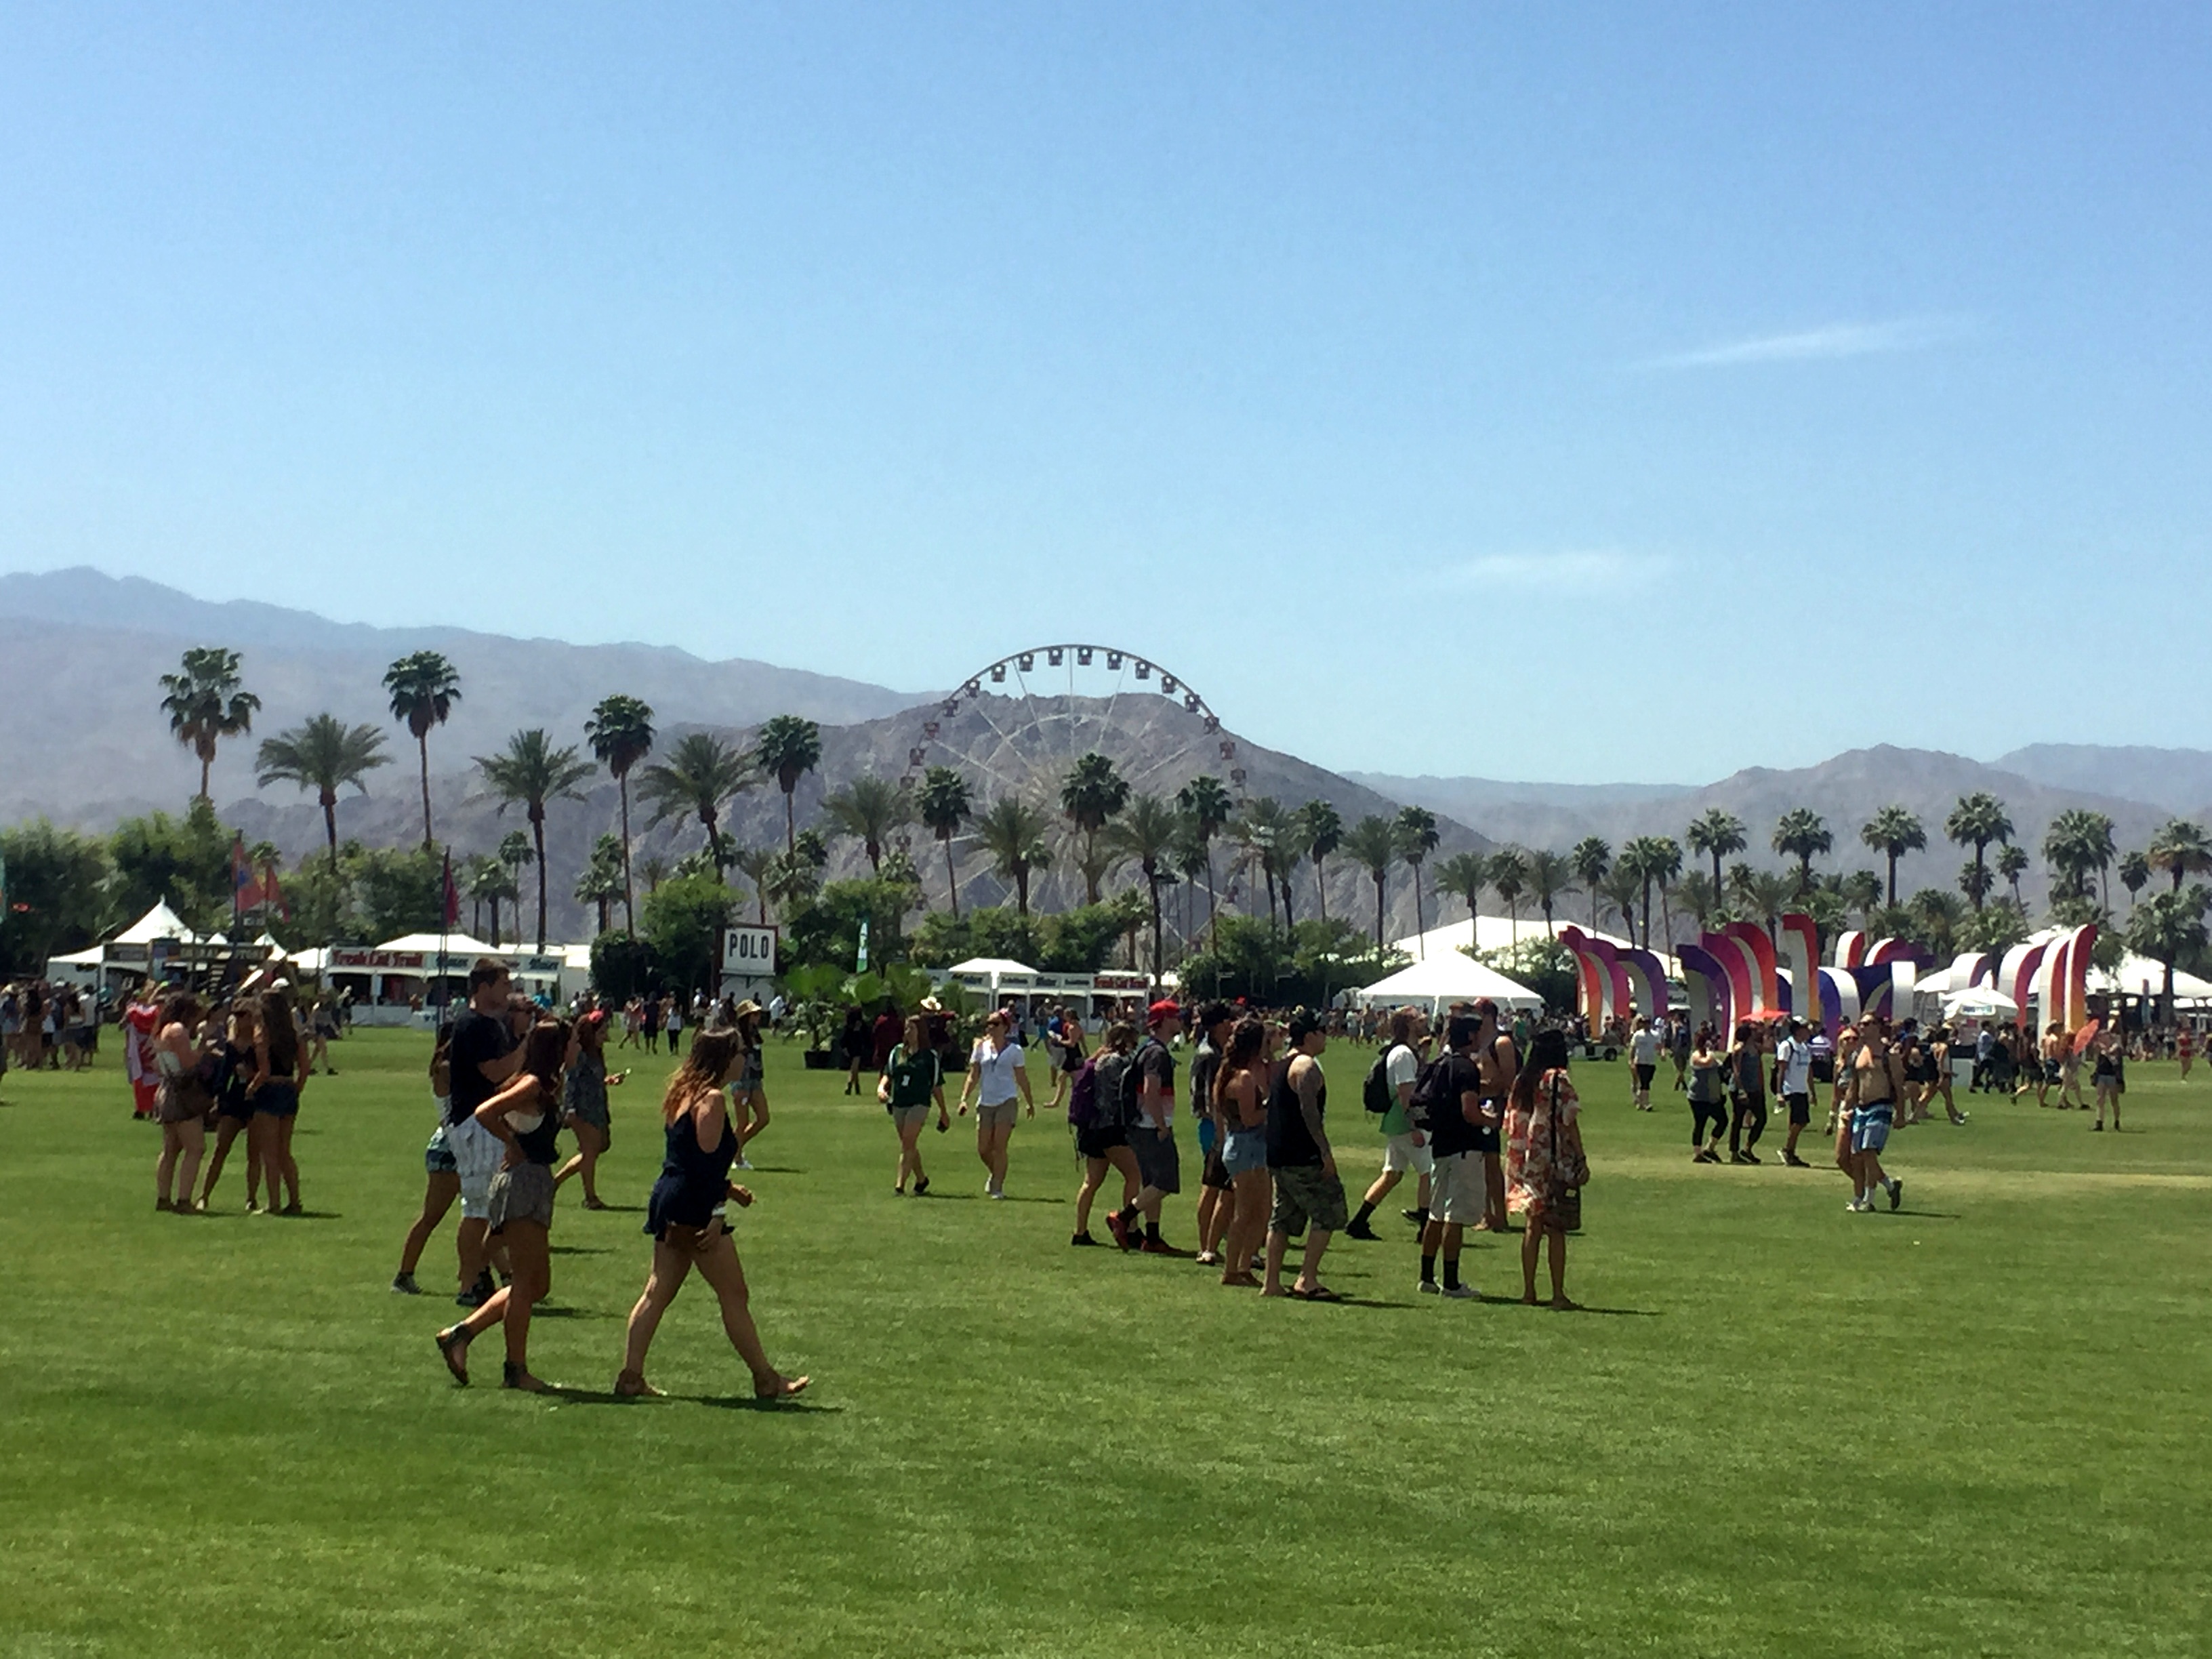 2015 Coachella Valley Music and Arts Festival